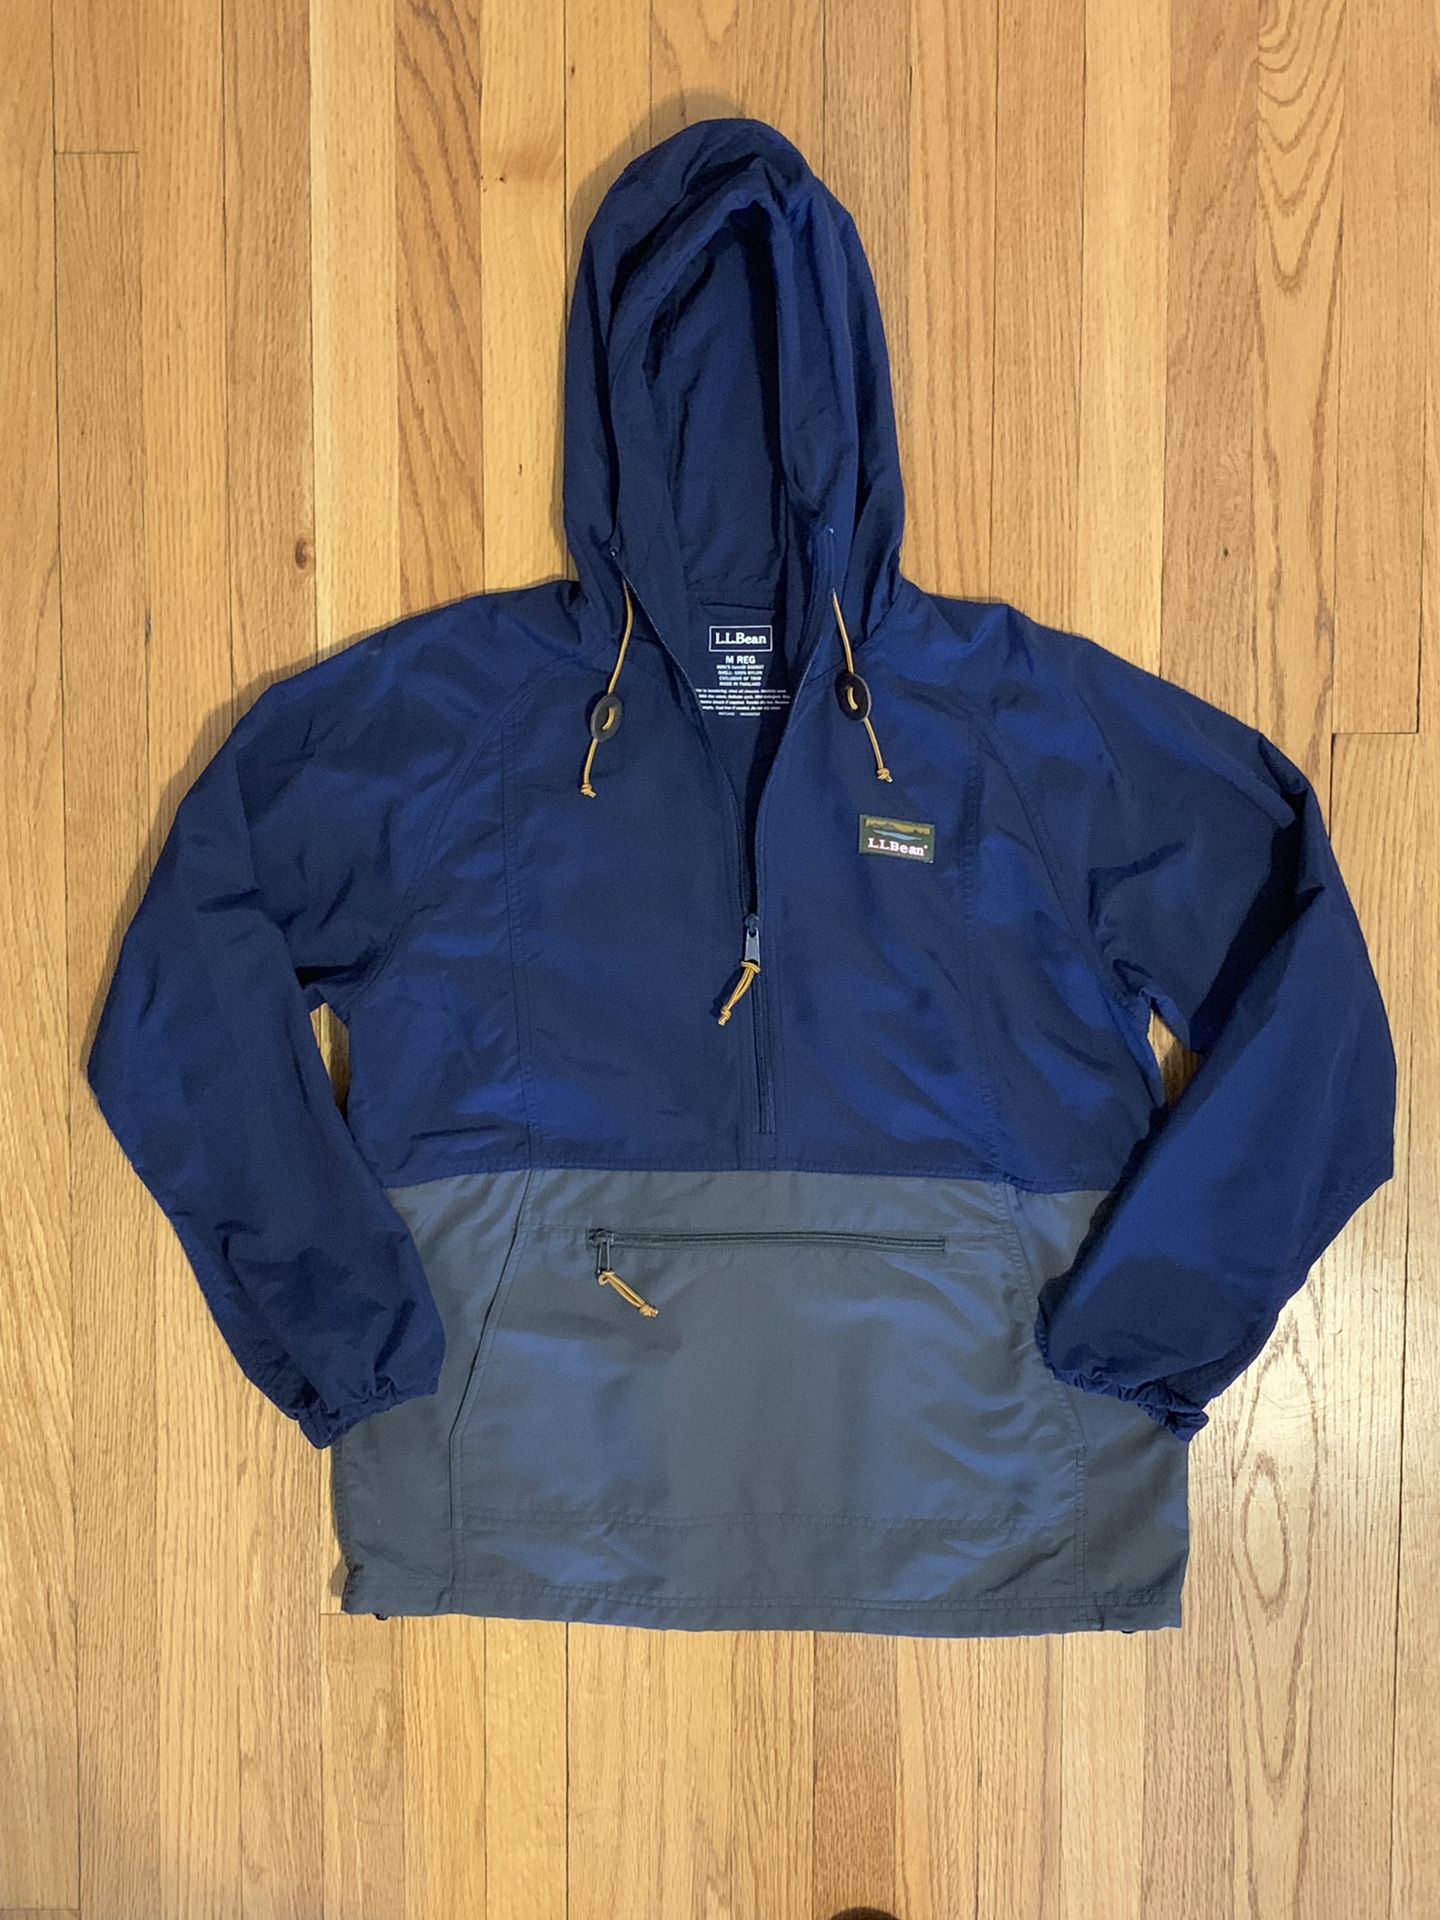 LL Bean Anorak rain jacket - medium for Sale in Park Ridge, IL - OfferUp